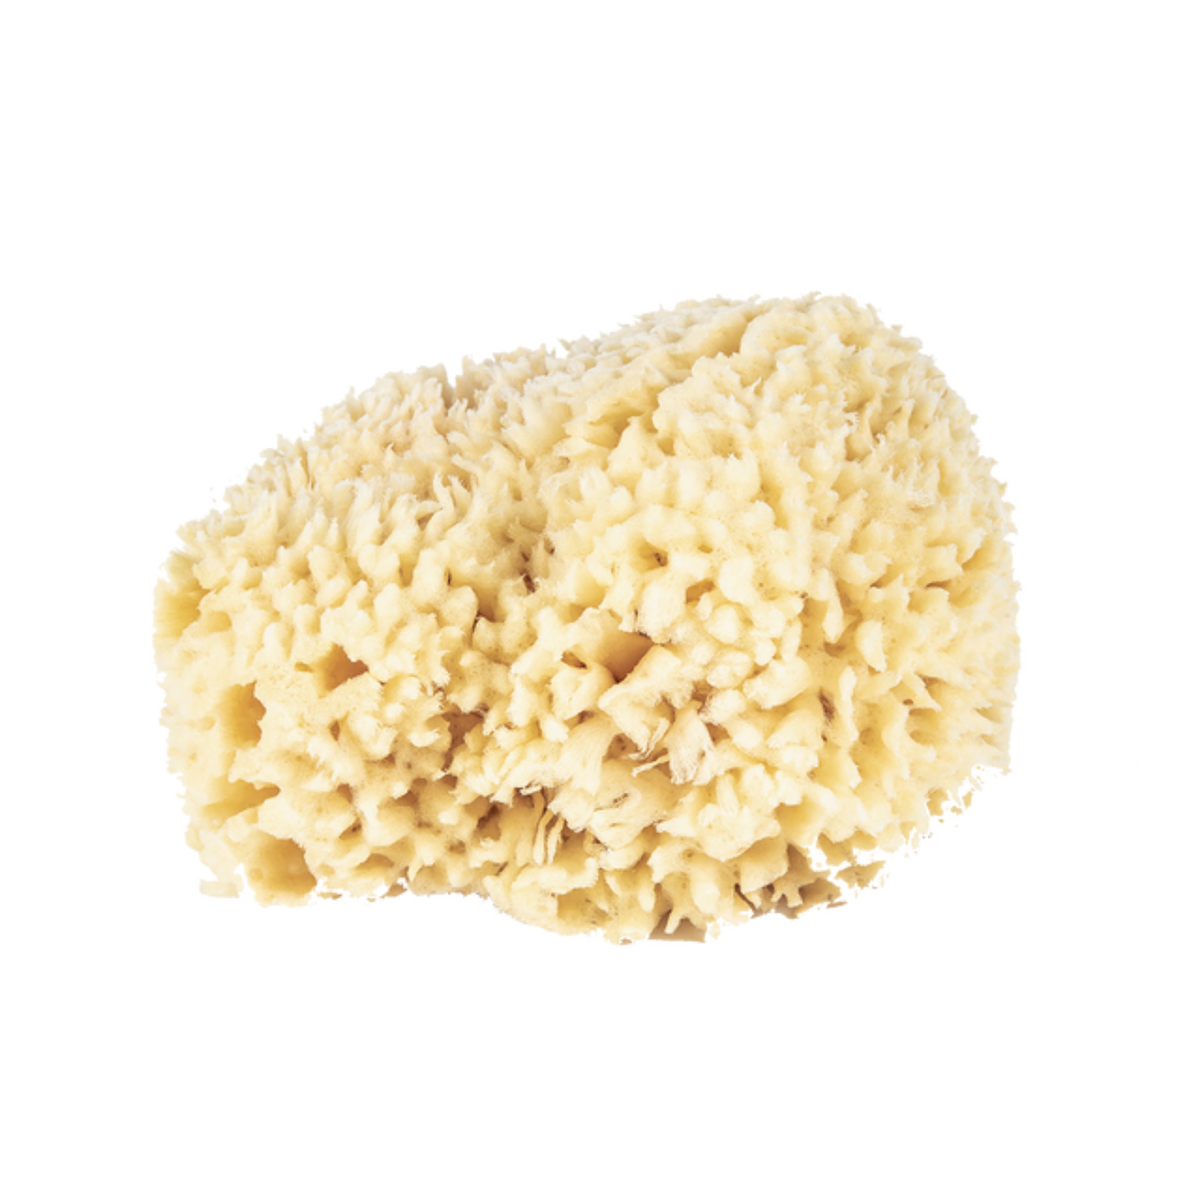 Primary image of 5.5 inch Sponge